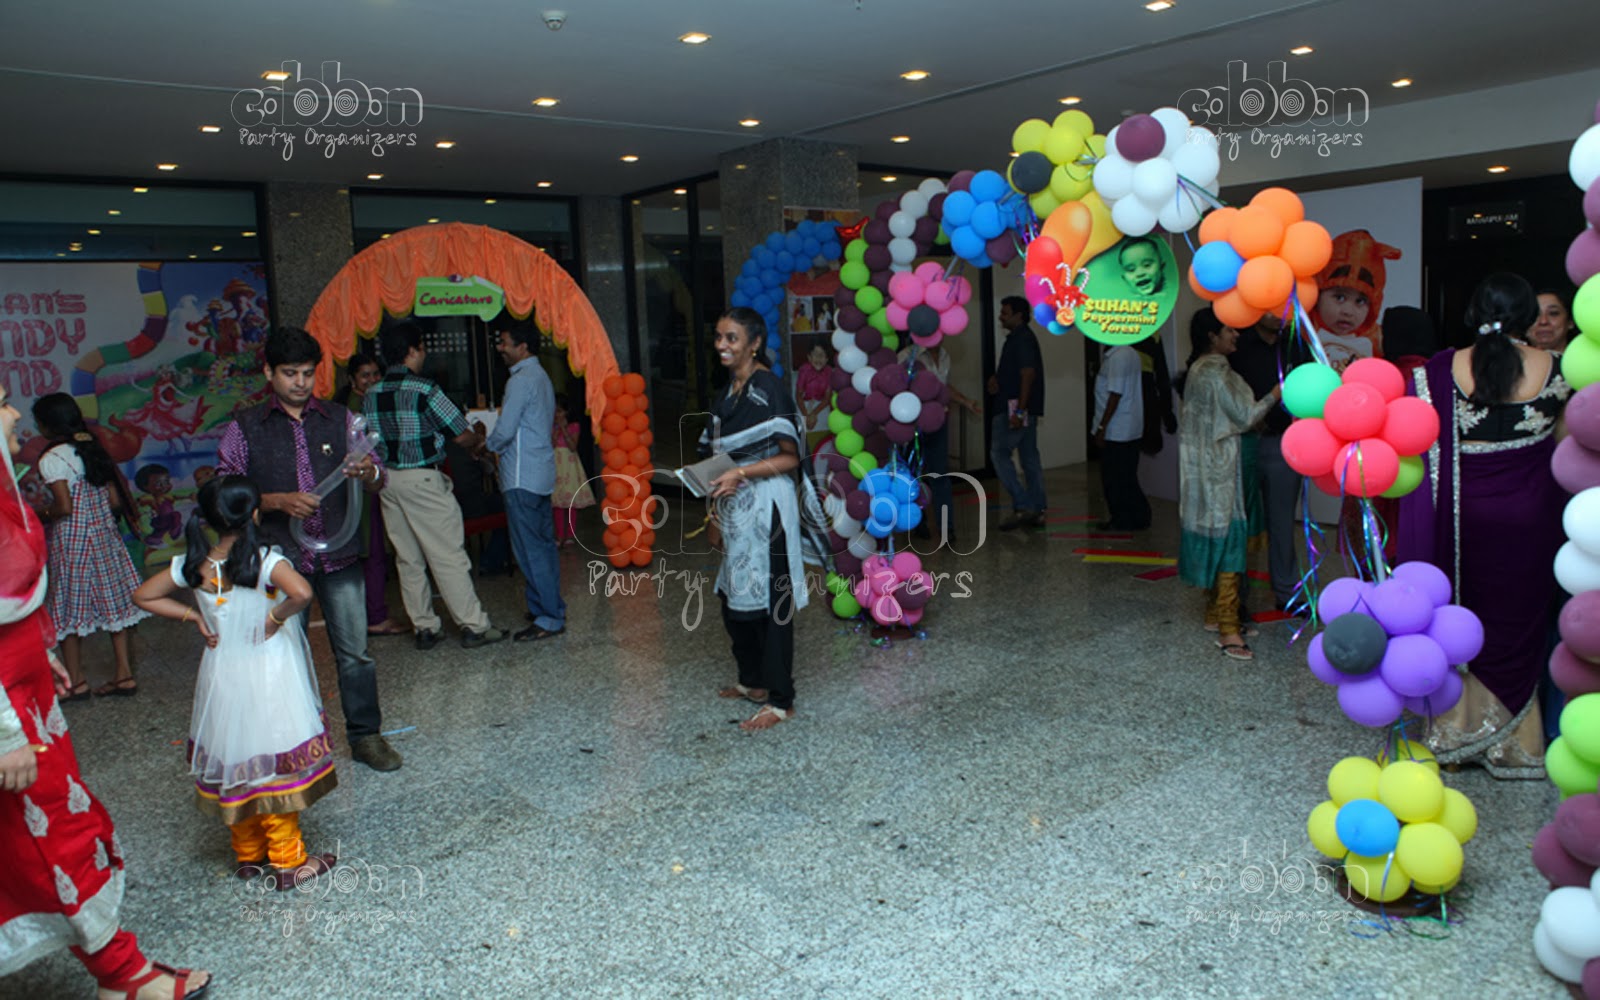  Birthday  party  organisers cochin kochi  Kerala  